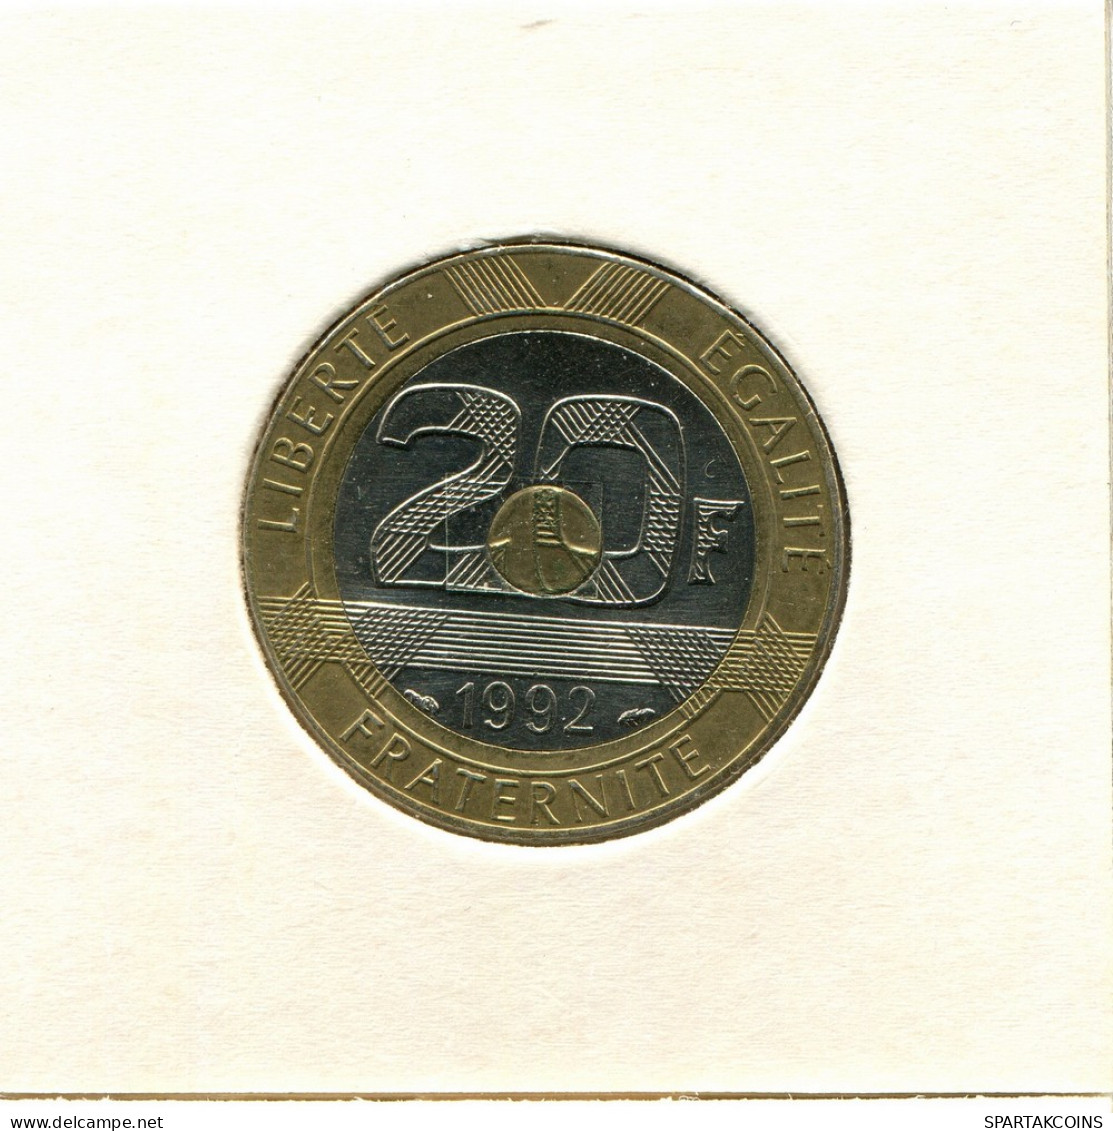 20 FRANCS 1992 FRANKREICH FRANCE Französisch Münze BIMETALLIC #BB631.D - 20 Francs